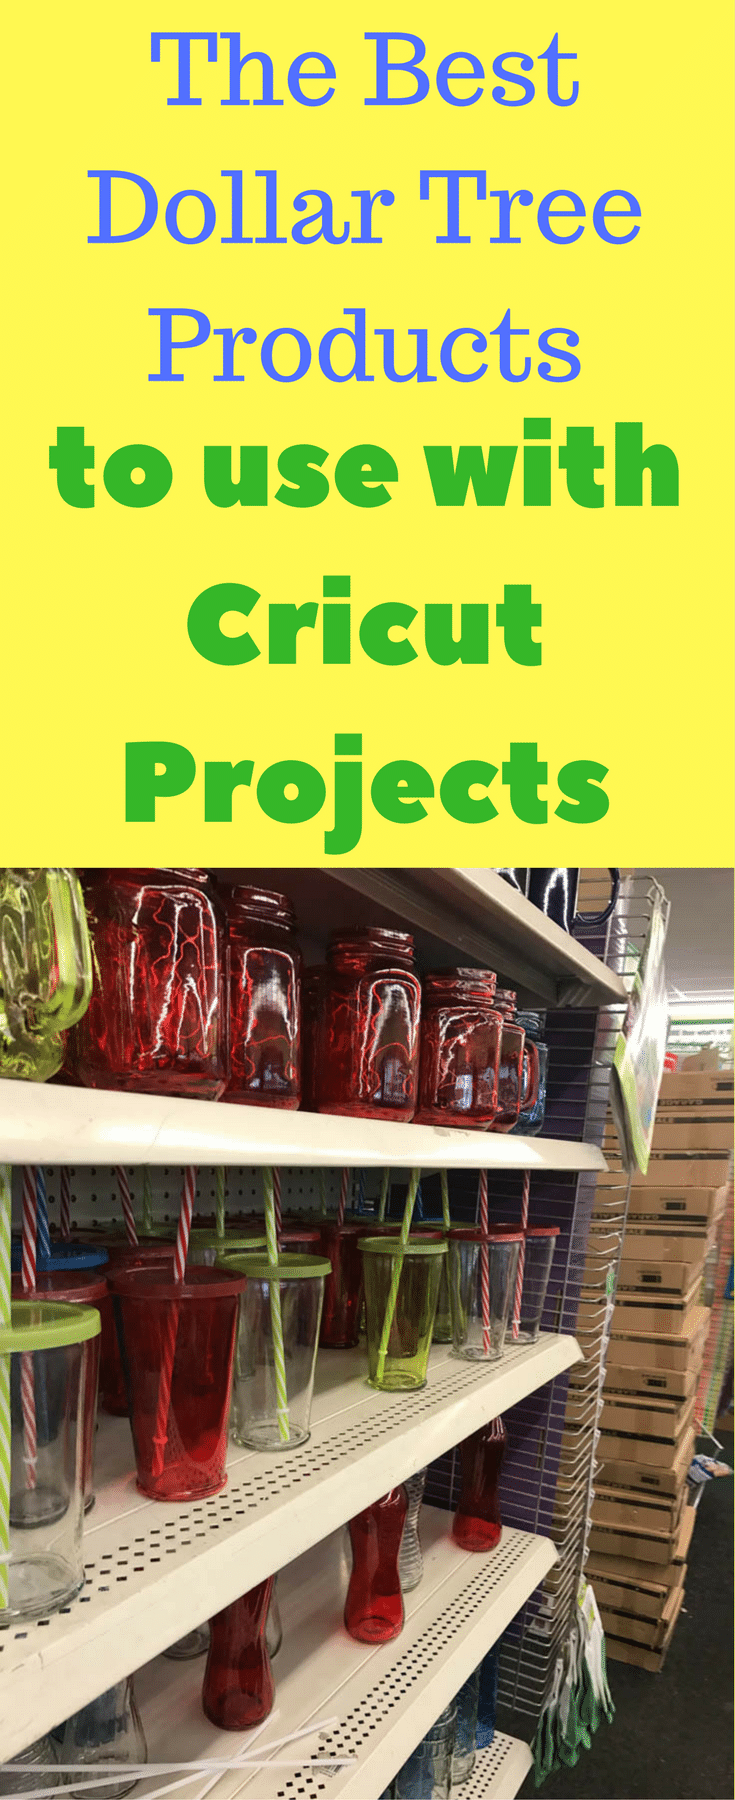 Cricut Project Ideas / Cricut home Decor / Cricut Designs / Dollar Tree Decorations / Dollar Tree Products / Dollar Tree Crafts / 